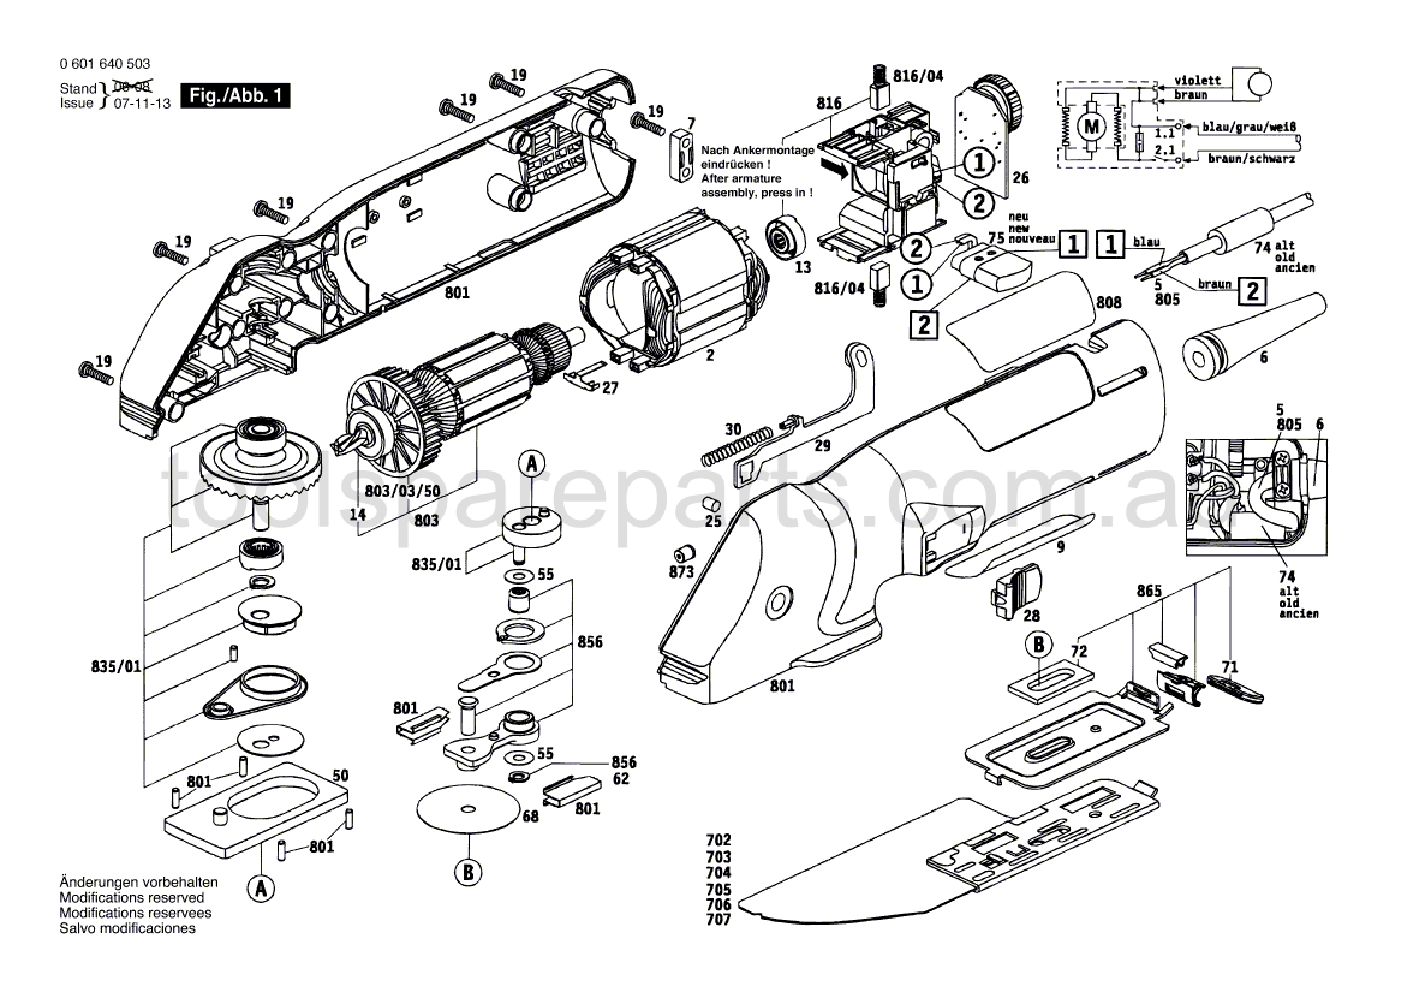 Bosch GFS 350 E SET 0601640737  Diagram 1